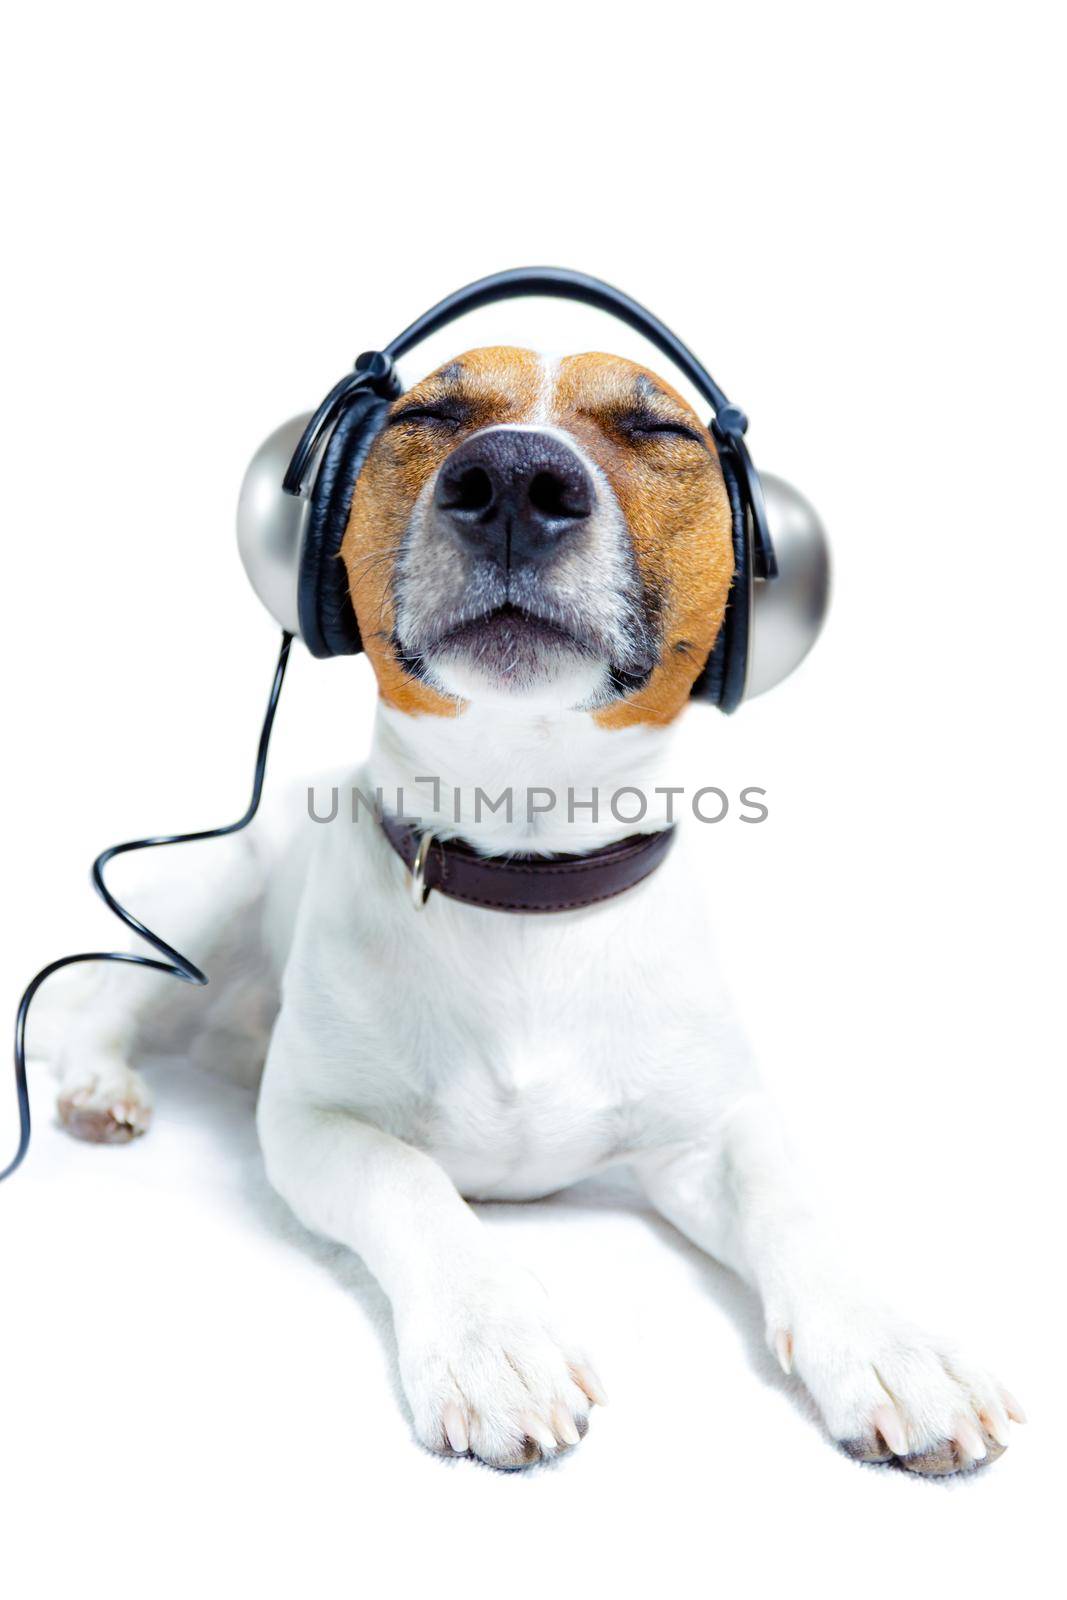 DOG LISTENING TO MUSIC